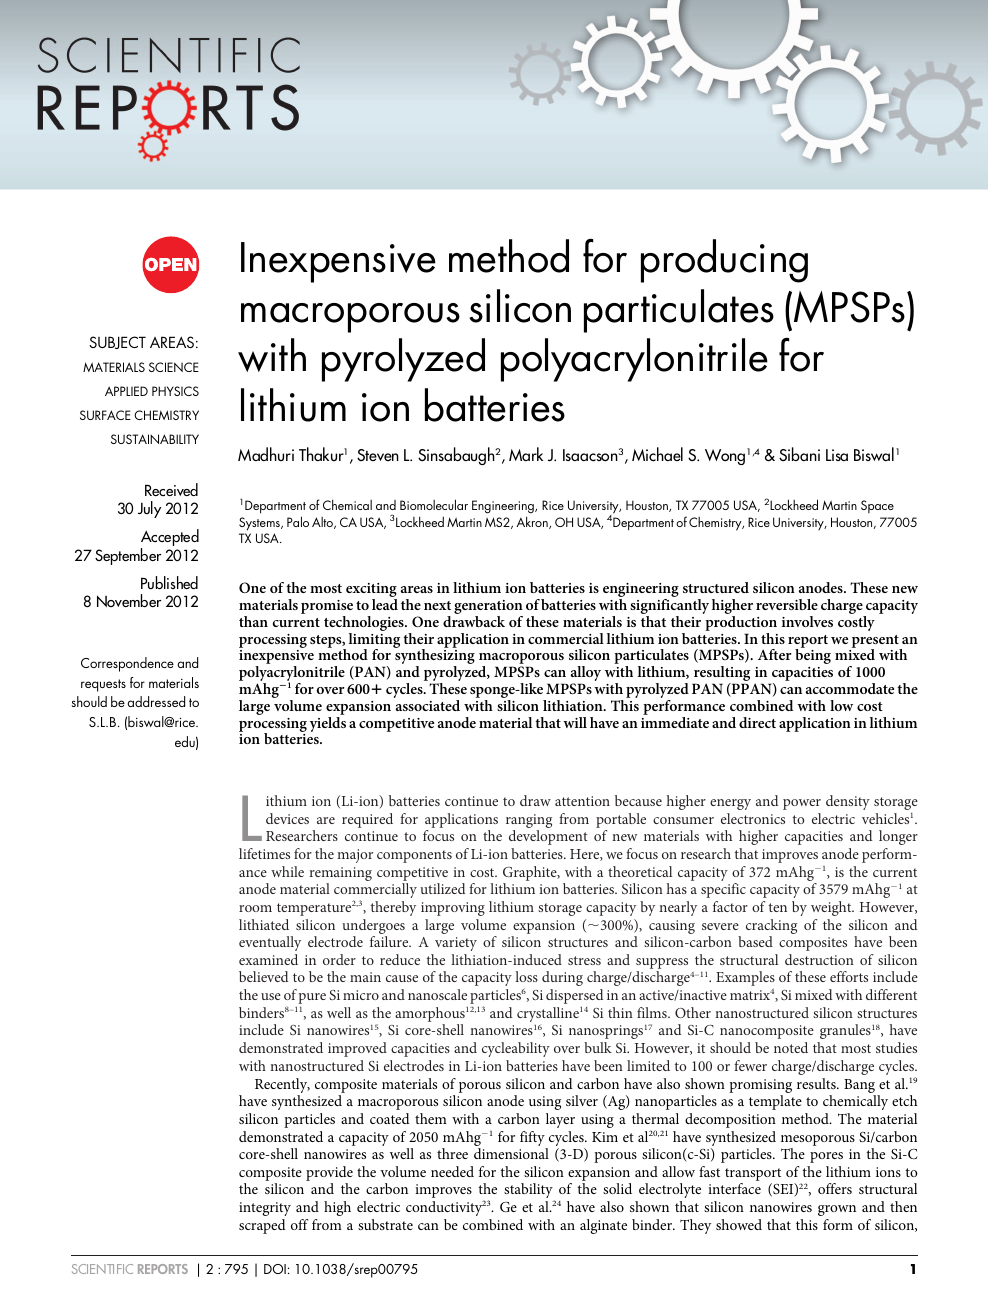 a) Description of process to generate a MPSP/PPAN composite material